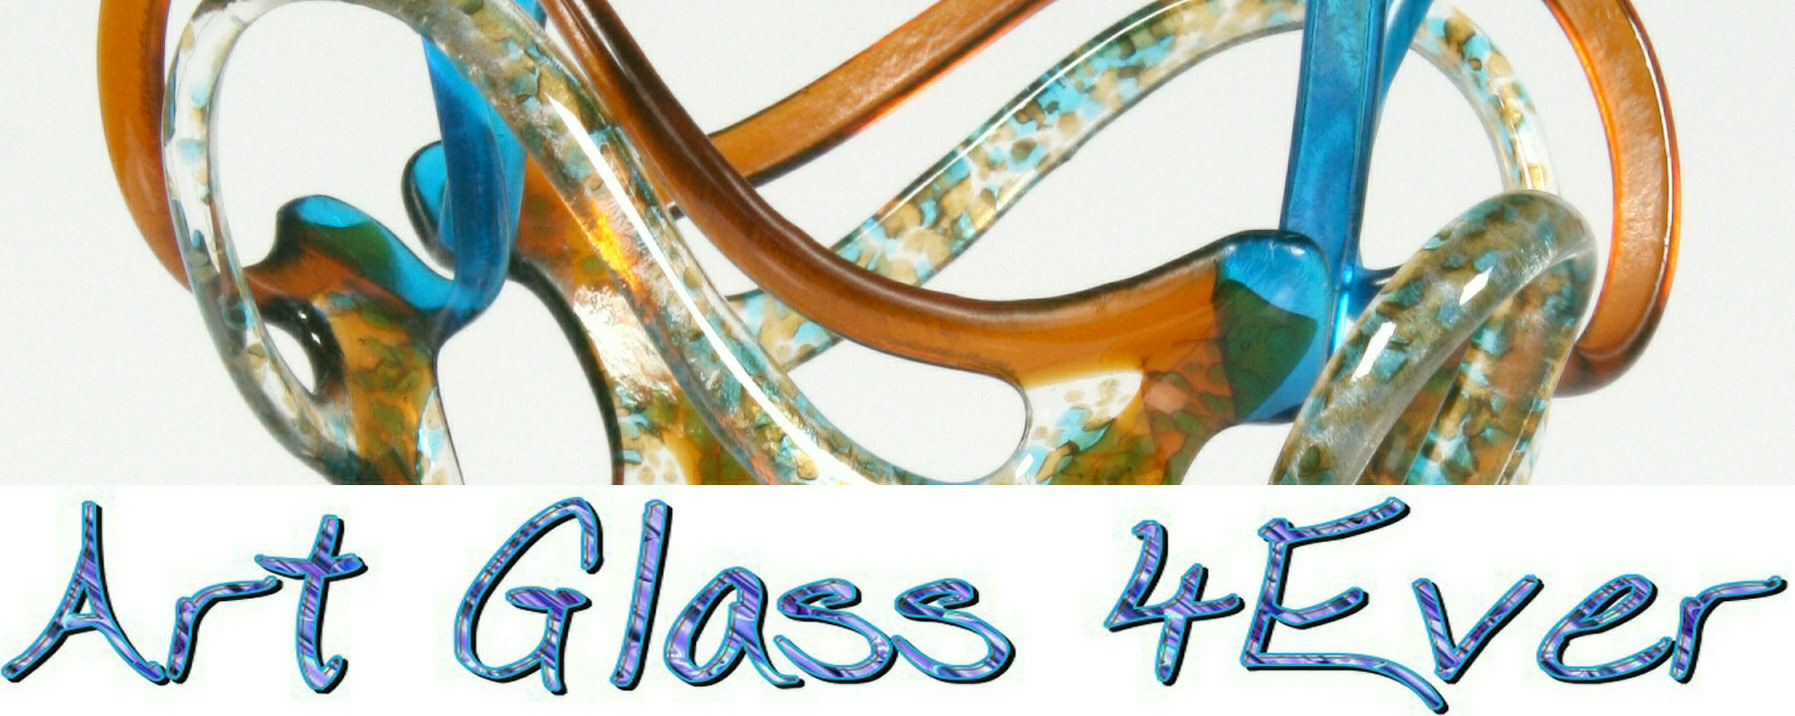 Art Glass 4Ever